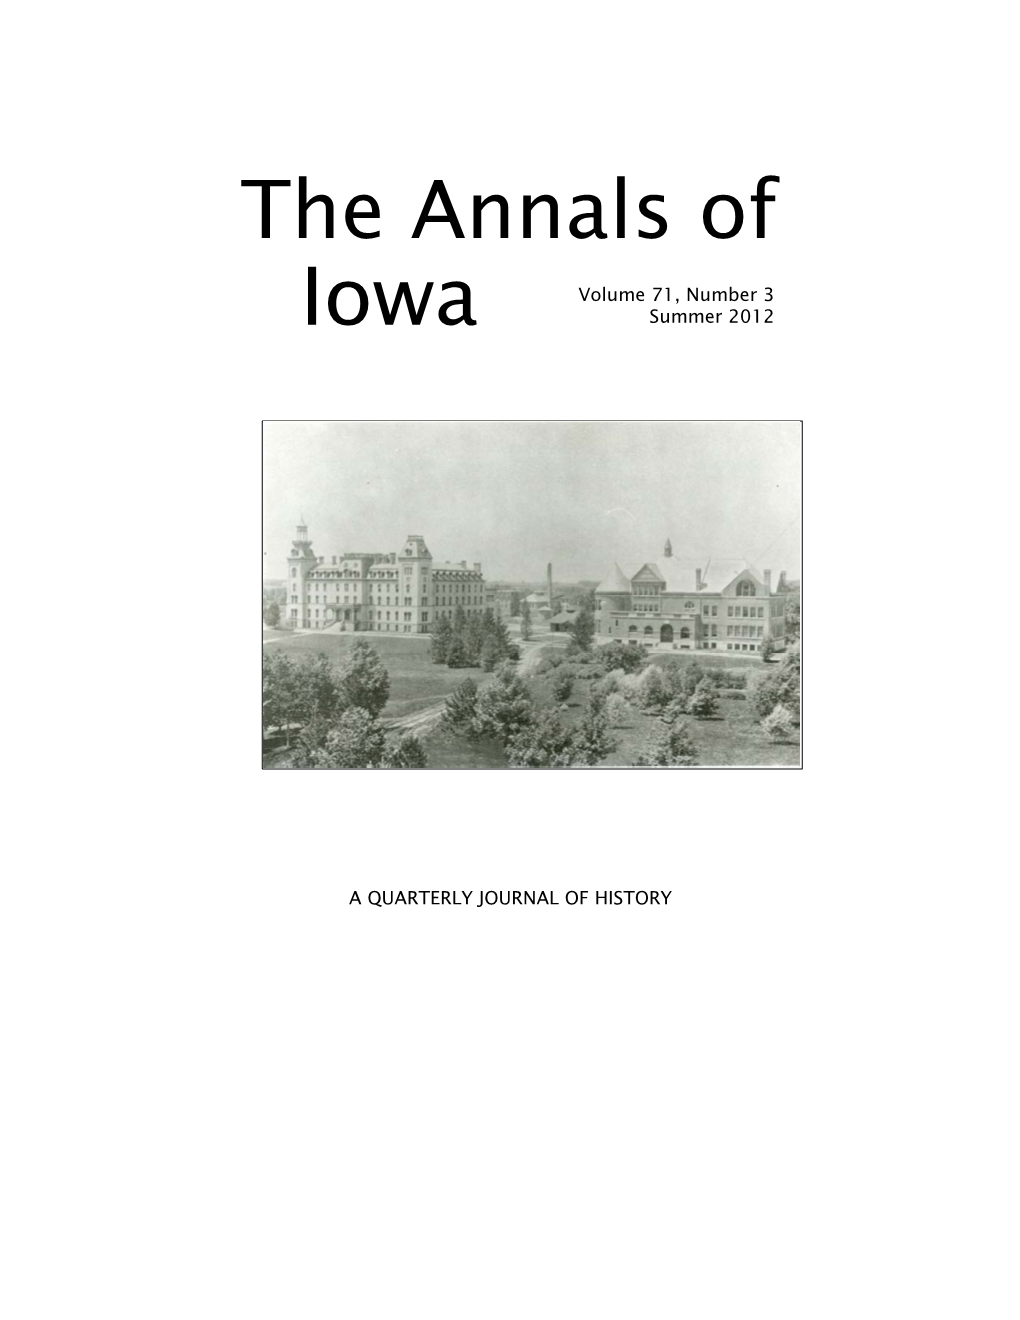 The Annals of Iowa Volume 71, Number 3